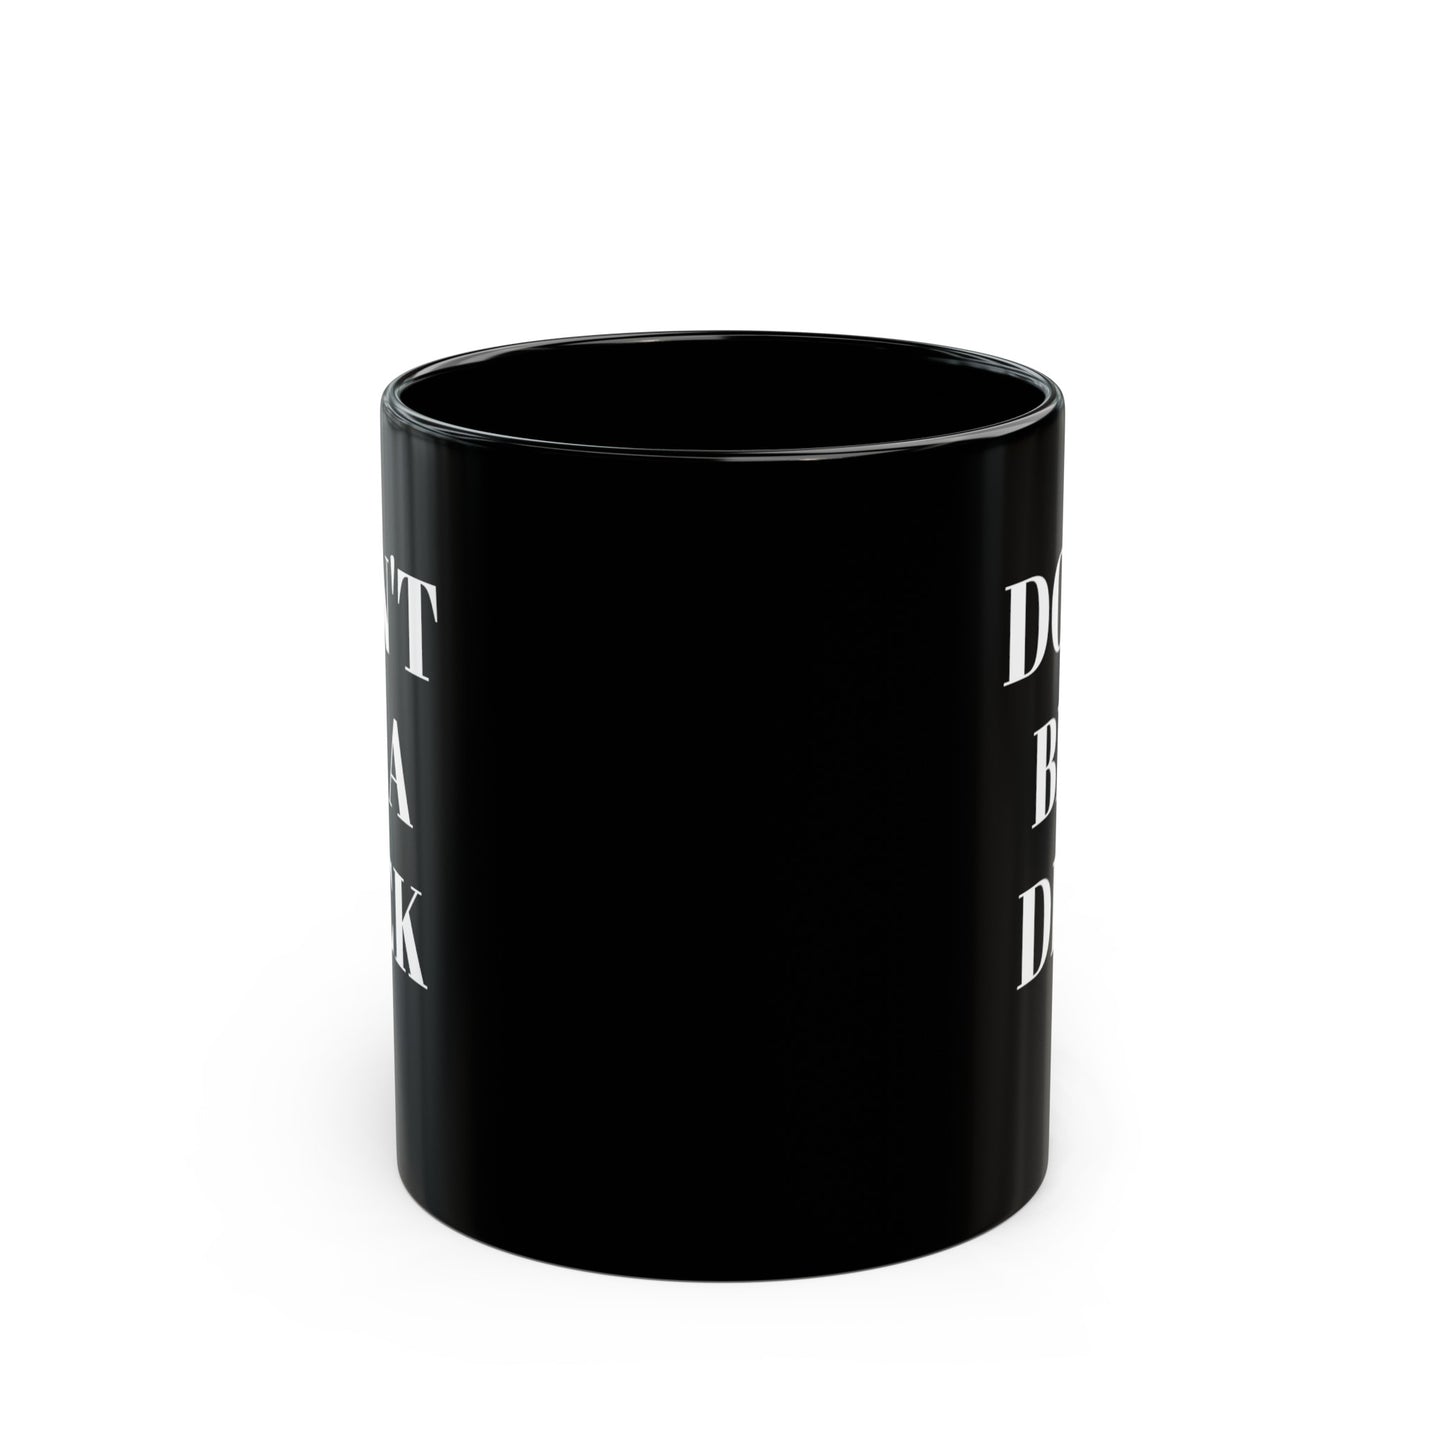 DONT BE A DICK - Black Mug (11oz)